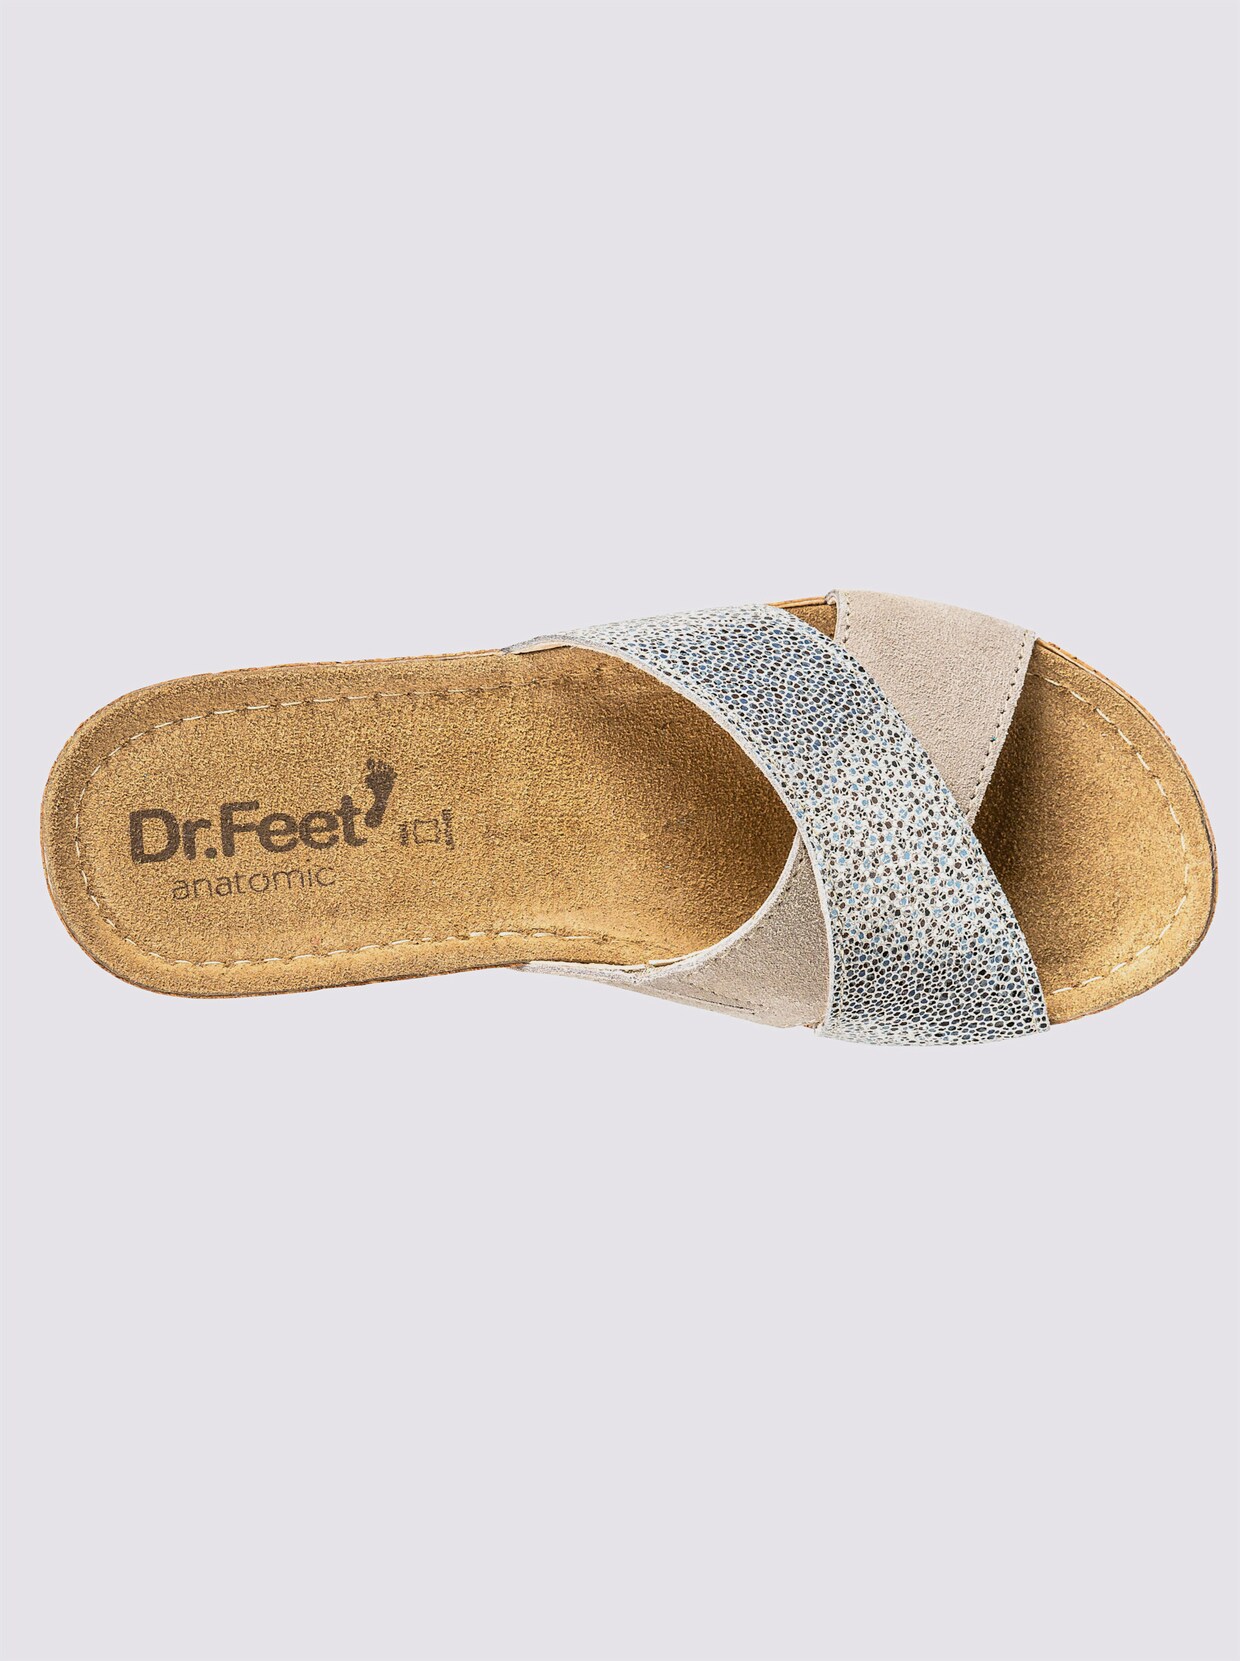 Dr. Feet Pantolette - taupe